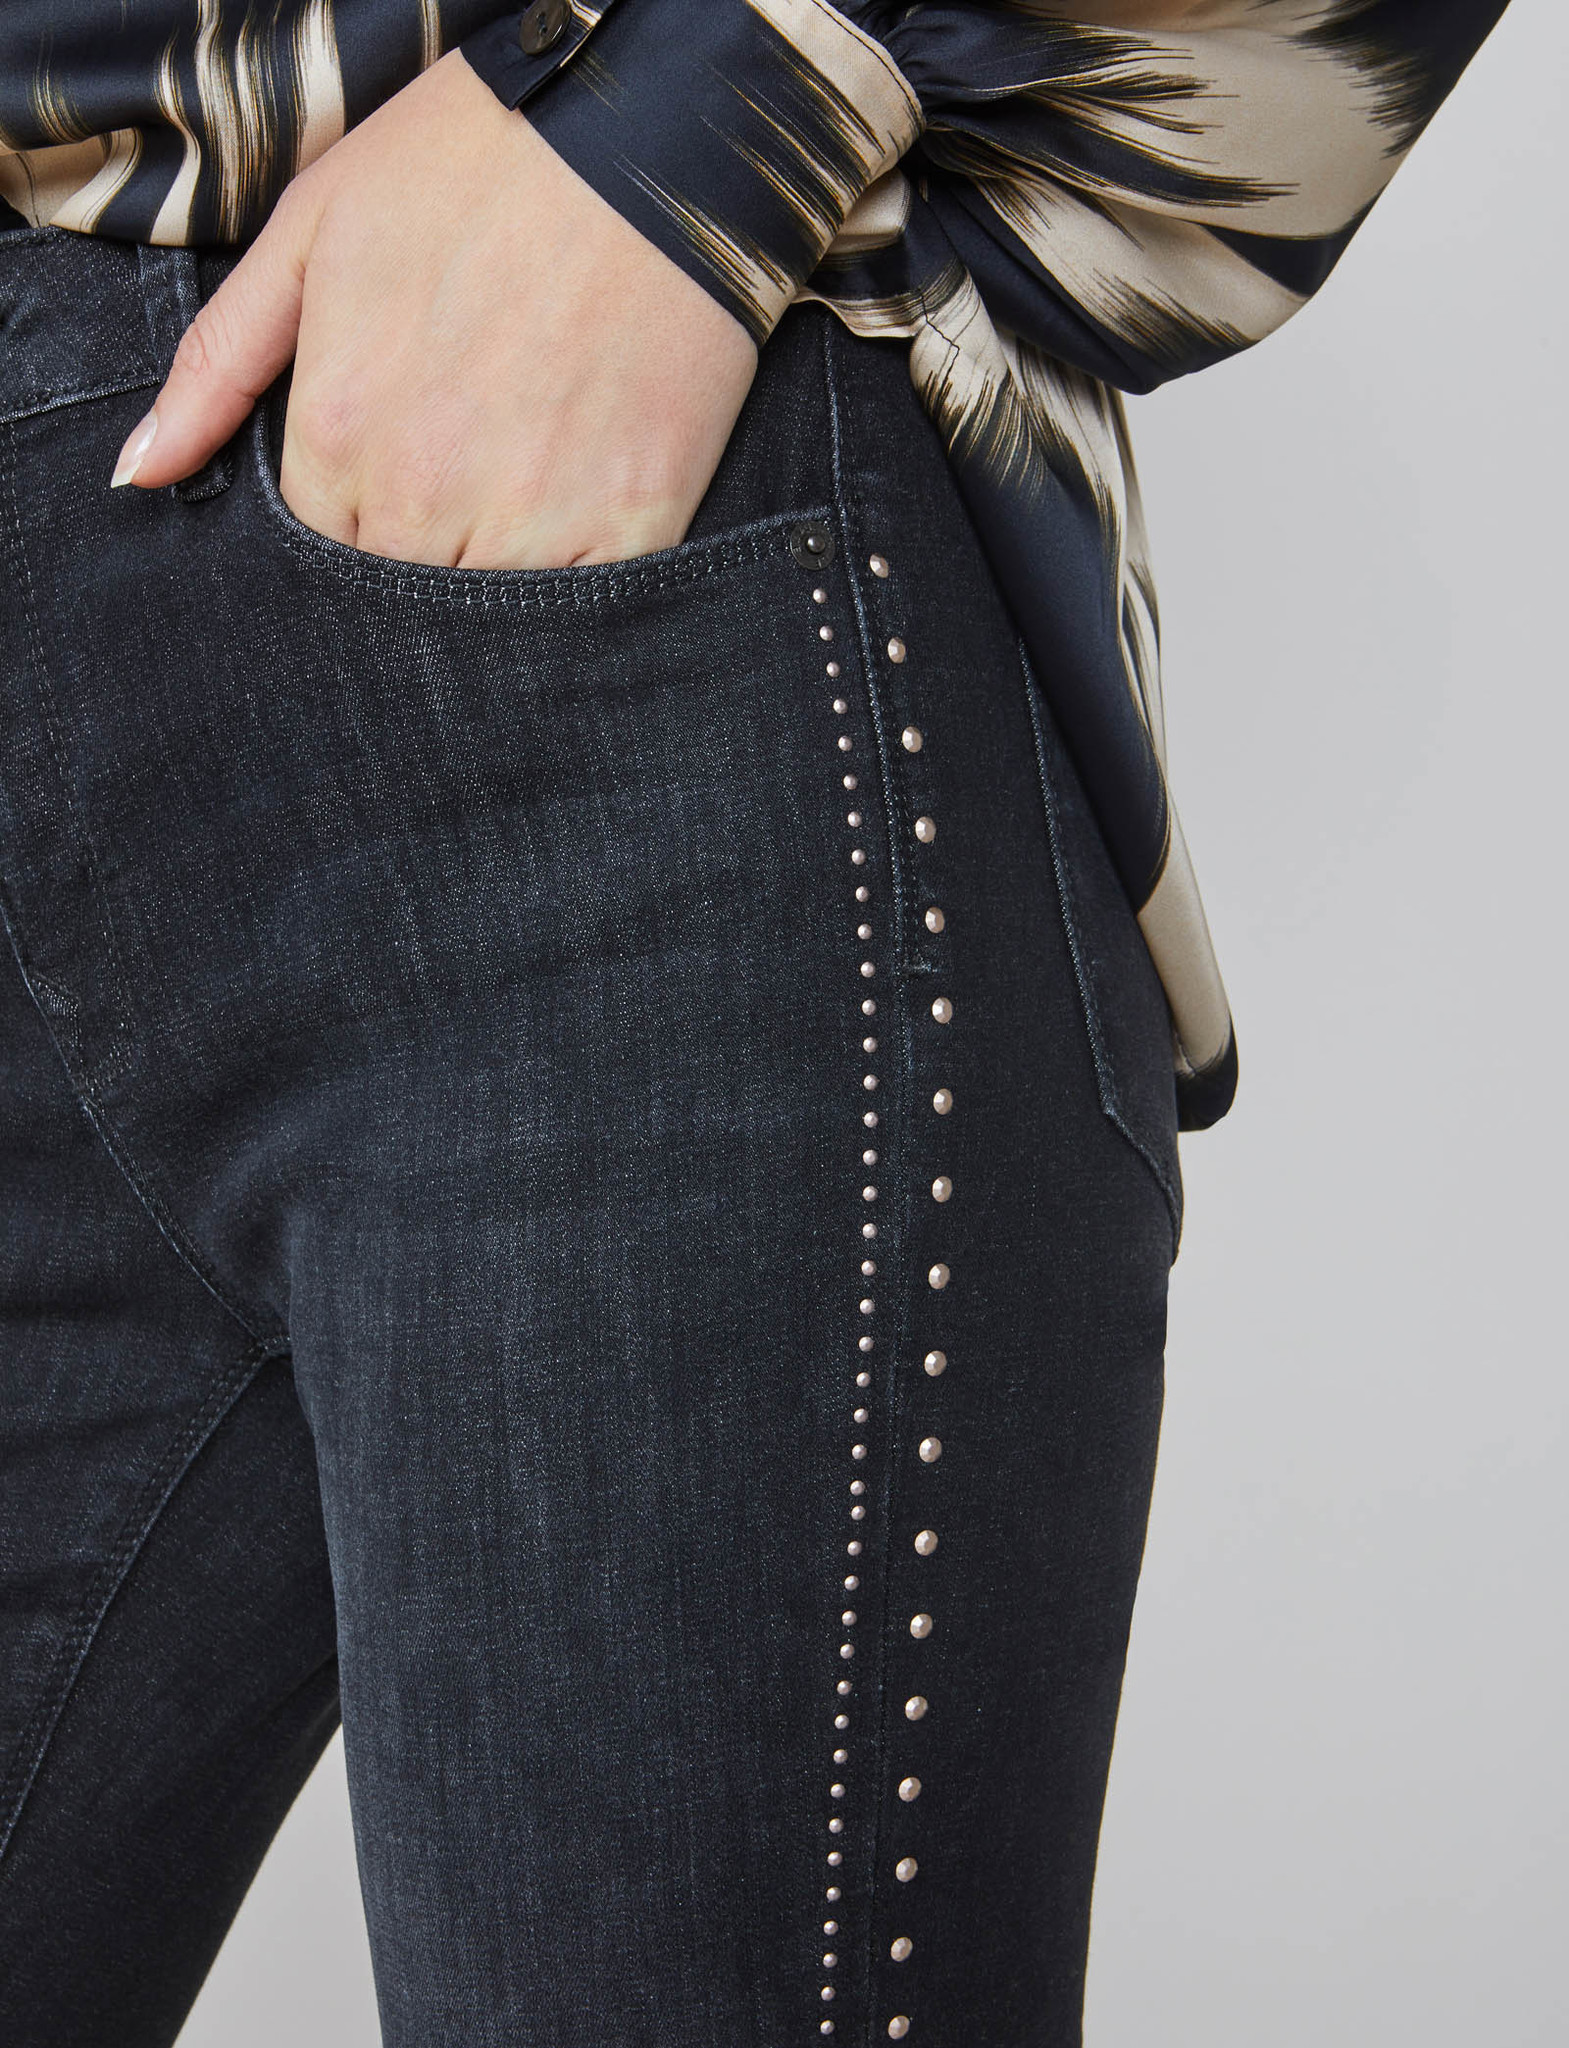 Trillen vieren Duiker 4s1988-5052 - Skinny jeans julia denim black - Black - Mode Galerie